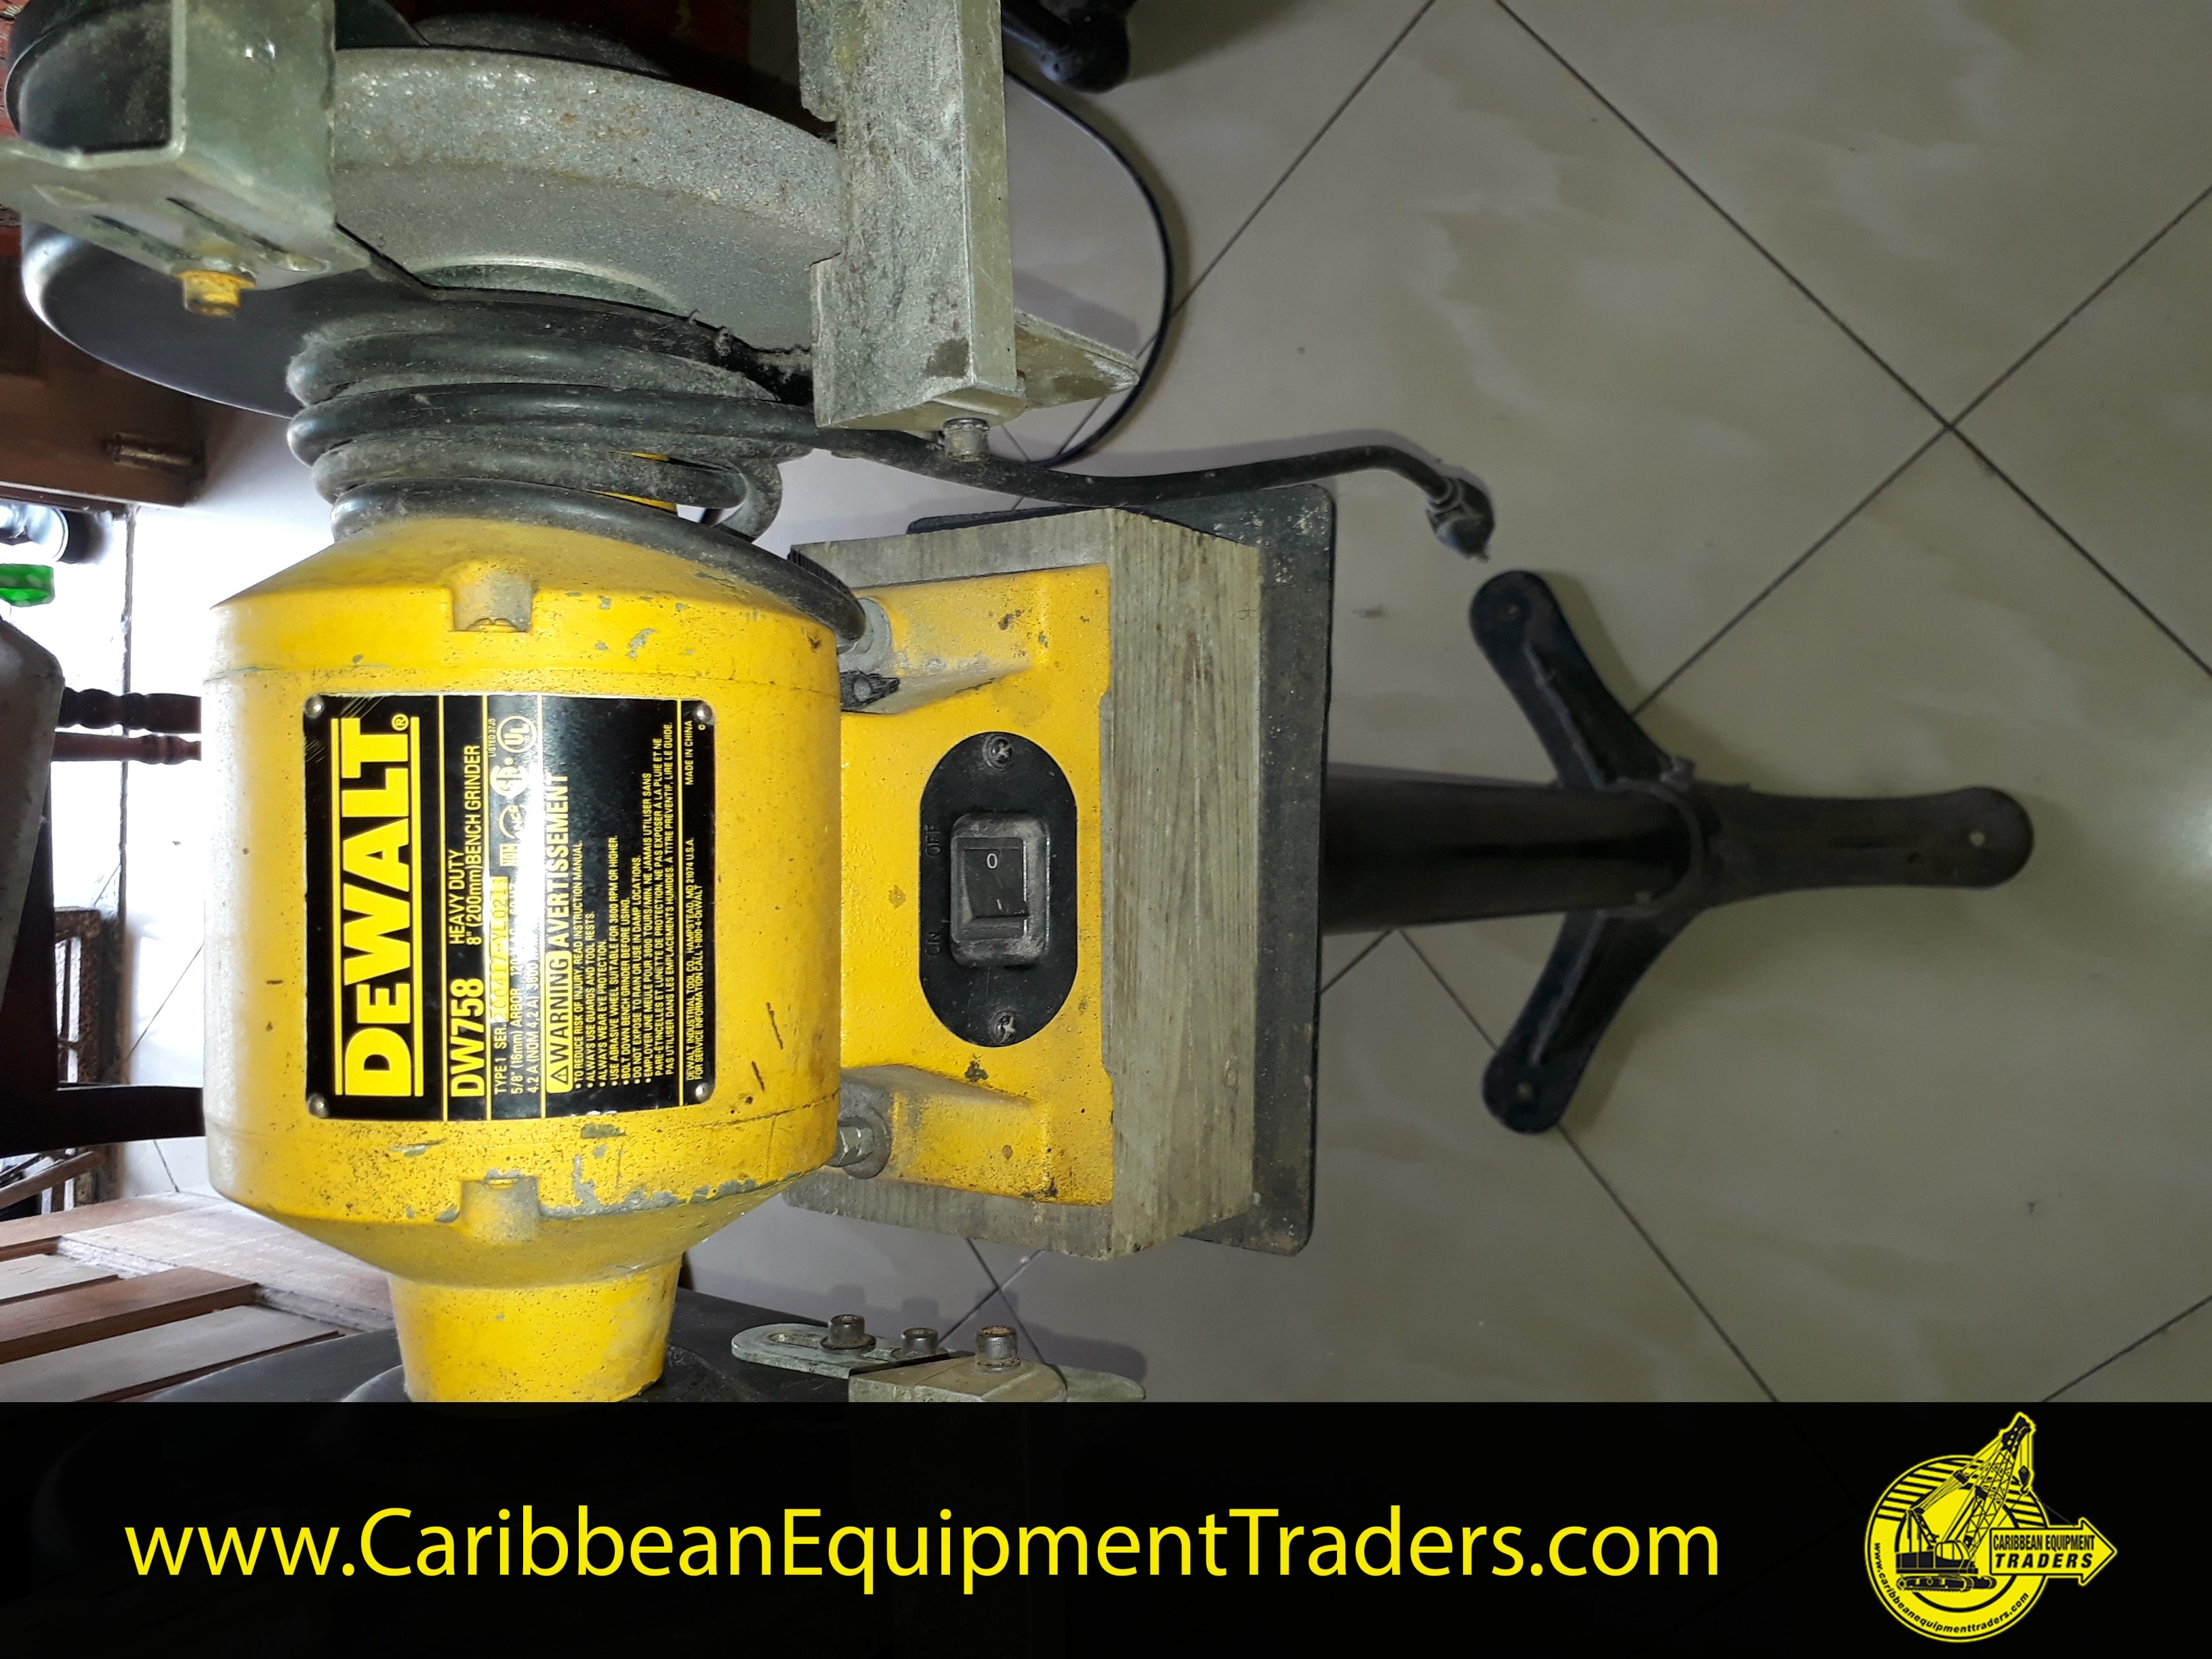 Dewalt bench grinder DW758 | Caribbean Equipment online classifieds for